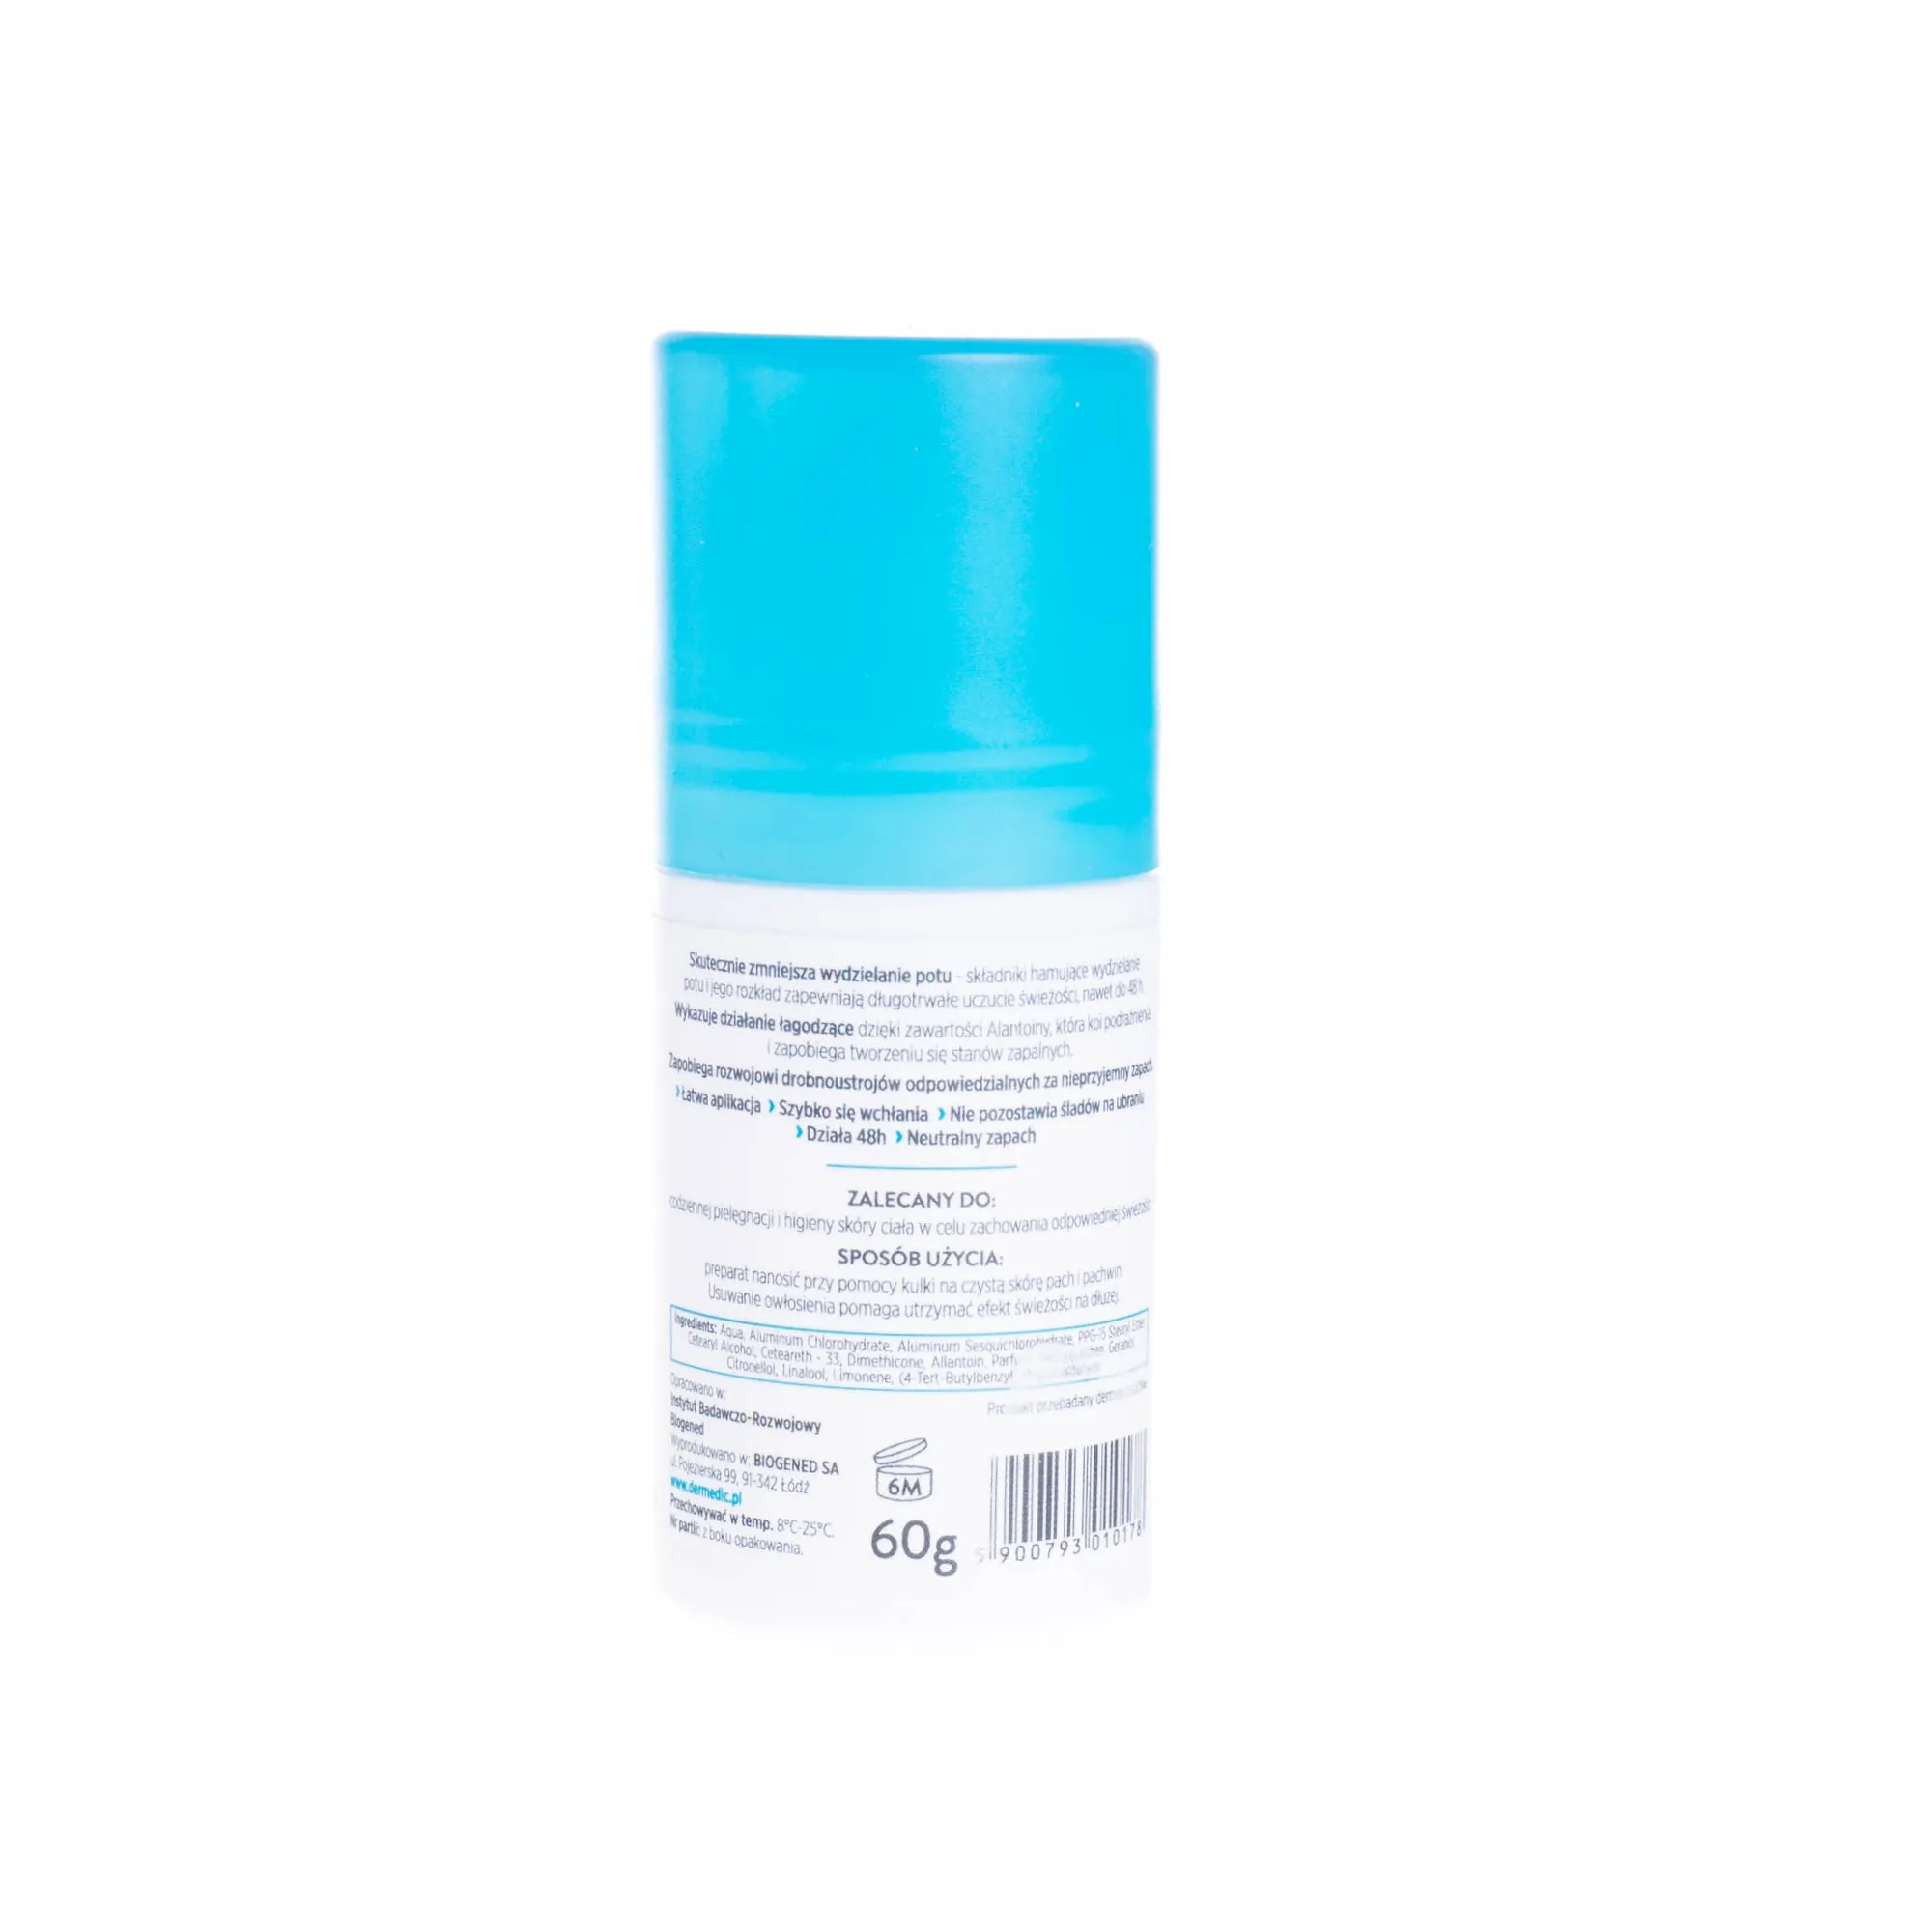 Antipersp R - dezodorant antyperspiracyjny, 60 g 